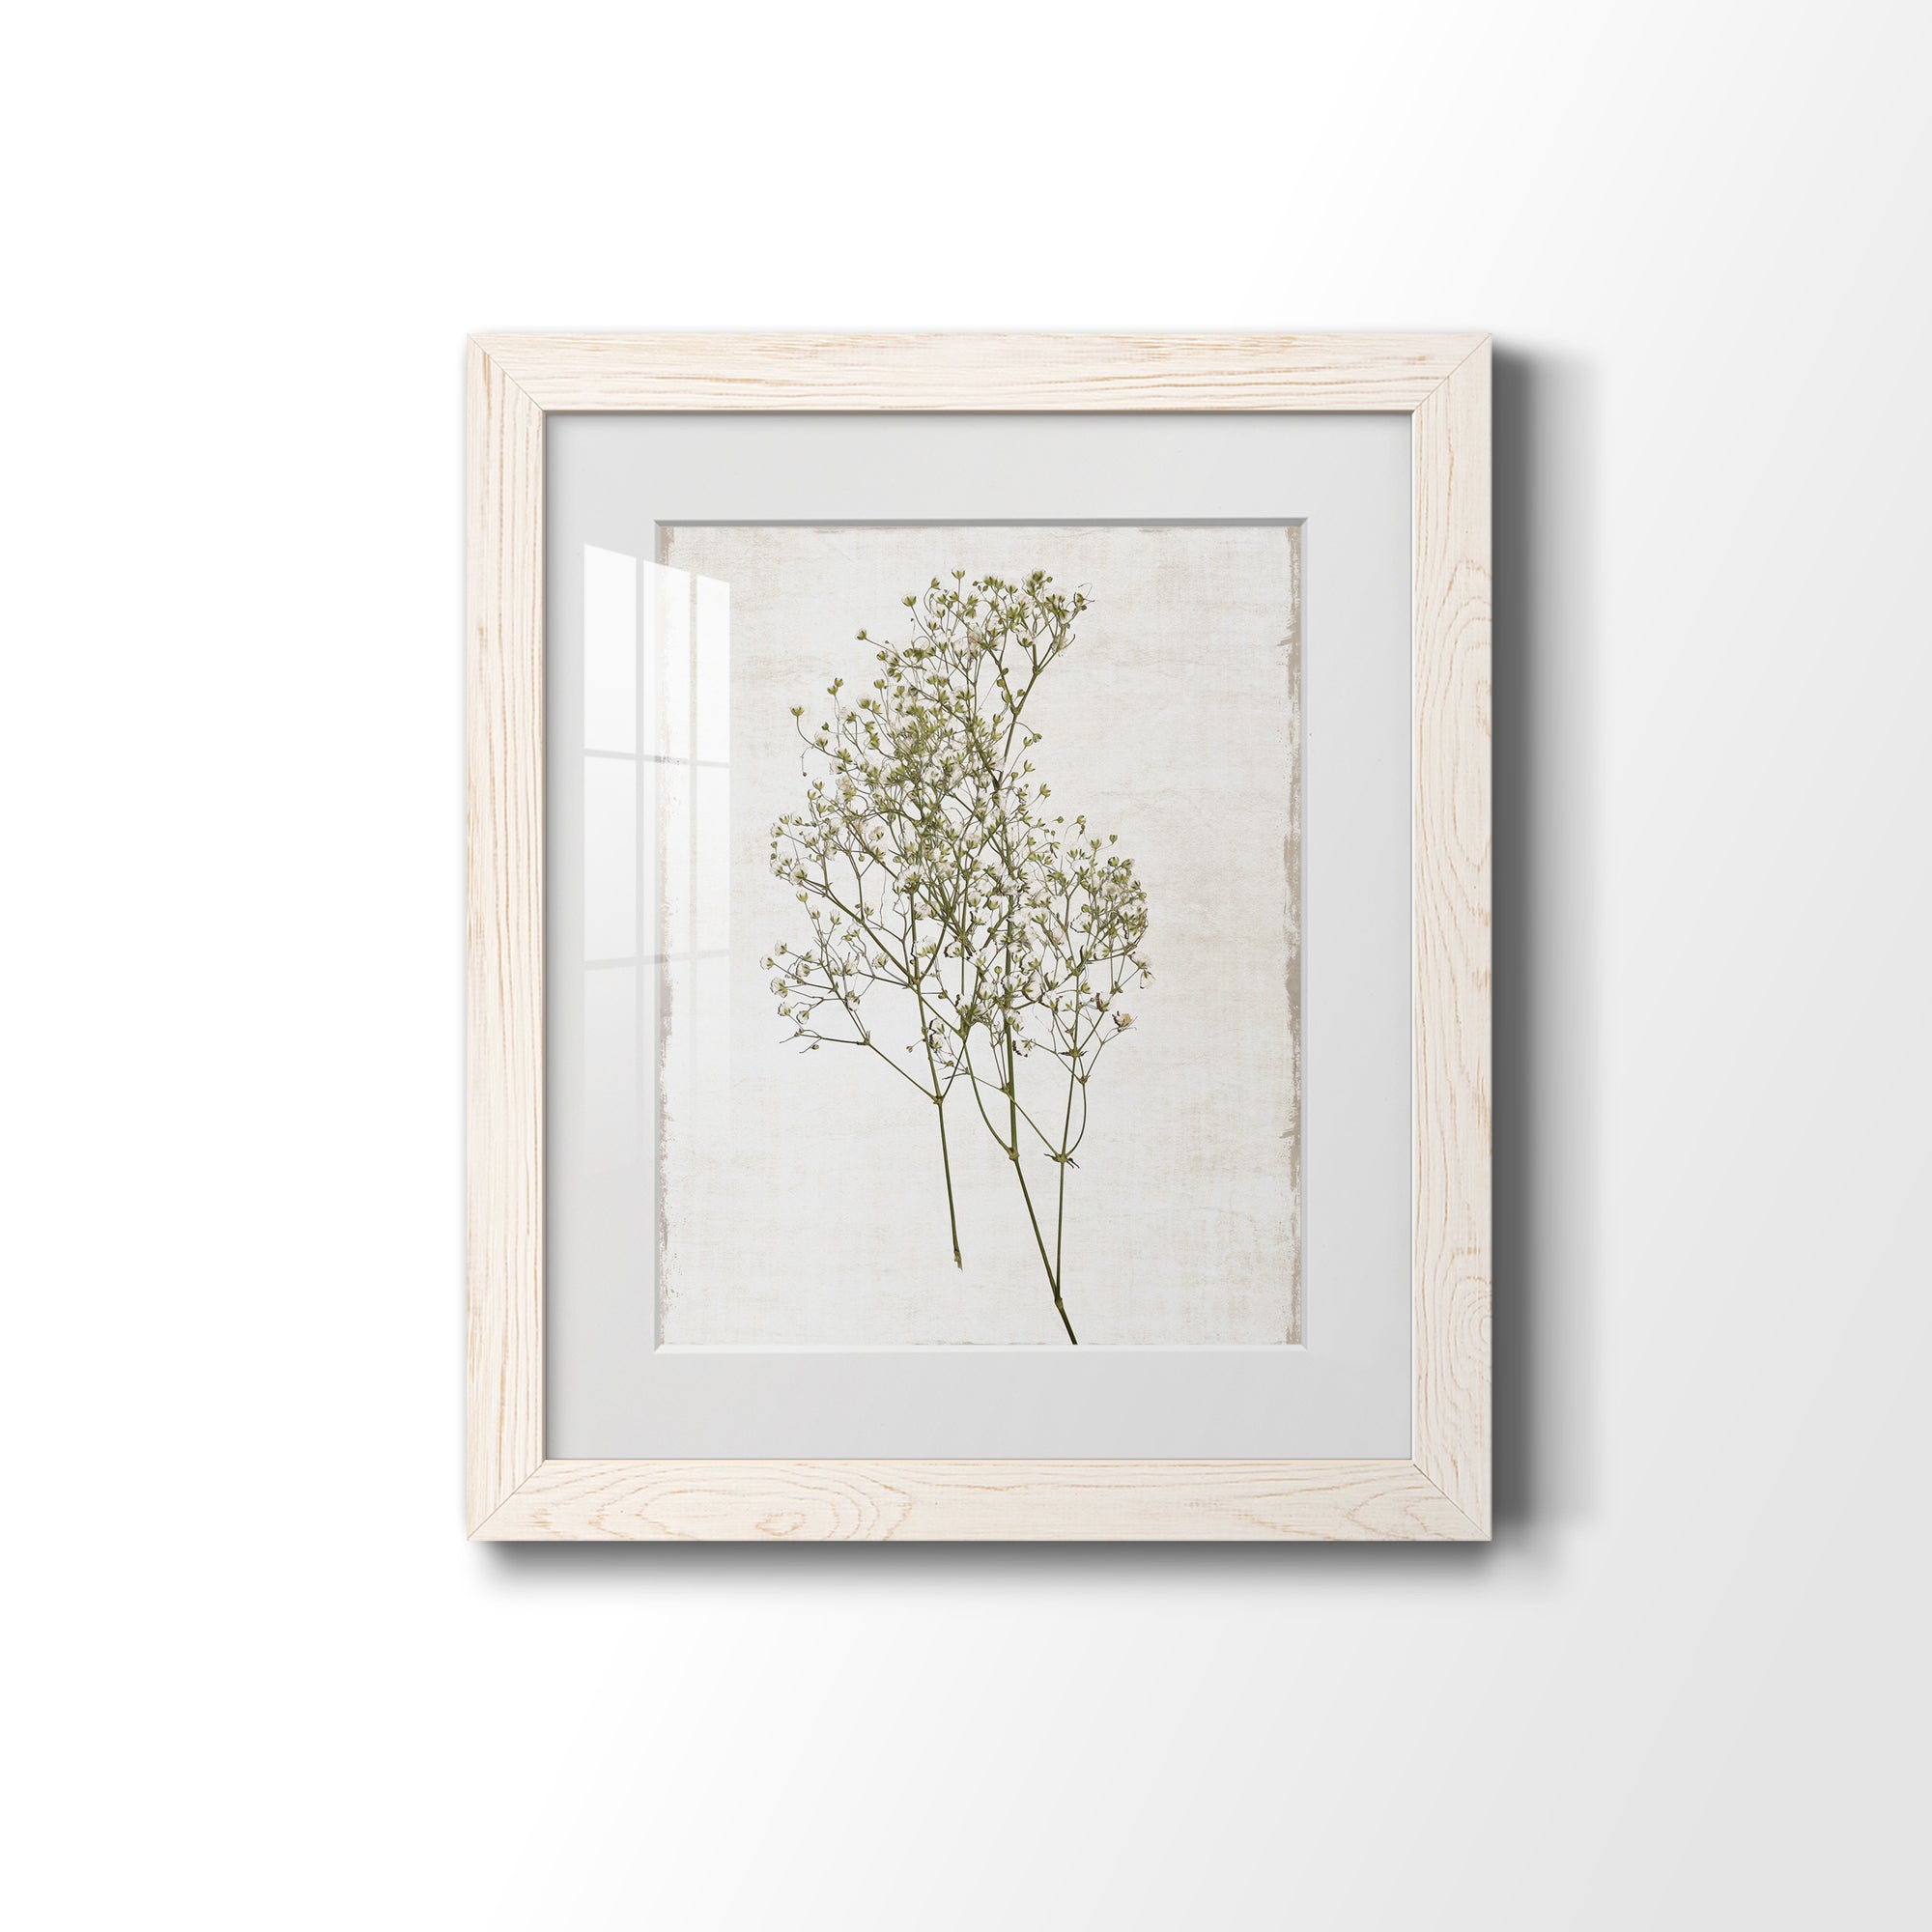 Farmhouse Pressed Flower I - Premium Framed Print - Distressed Barnwood Frame - Ready to Hang